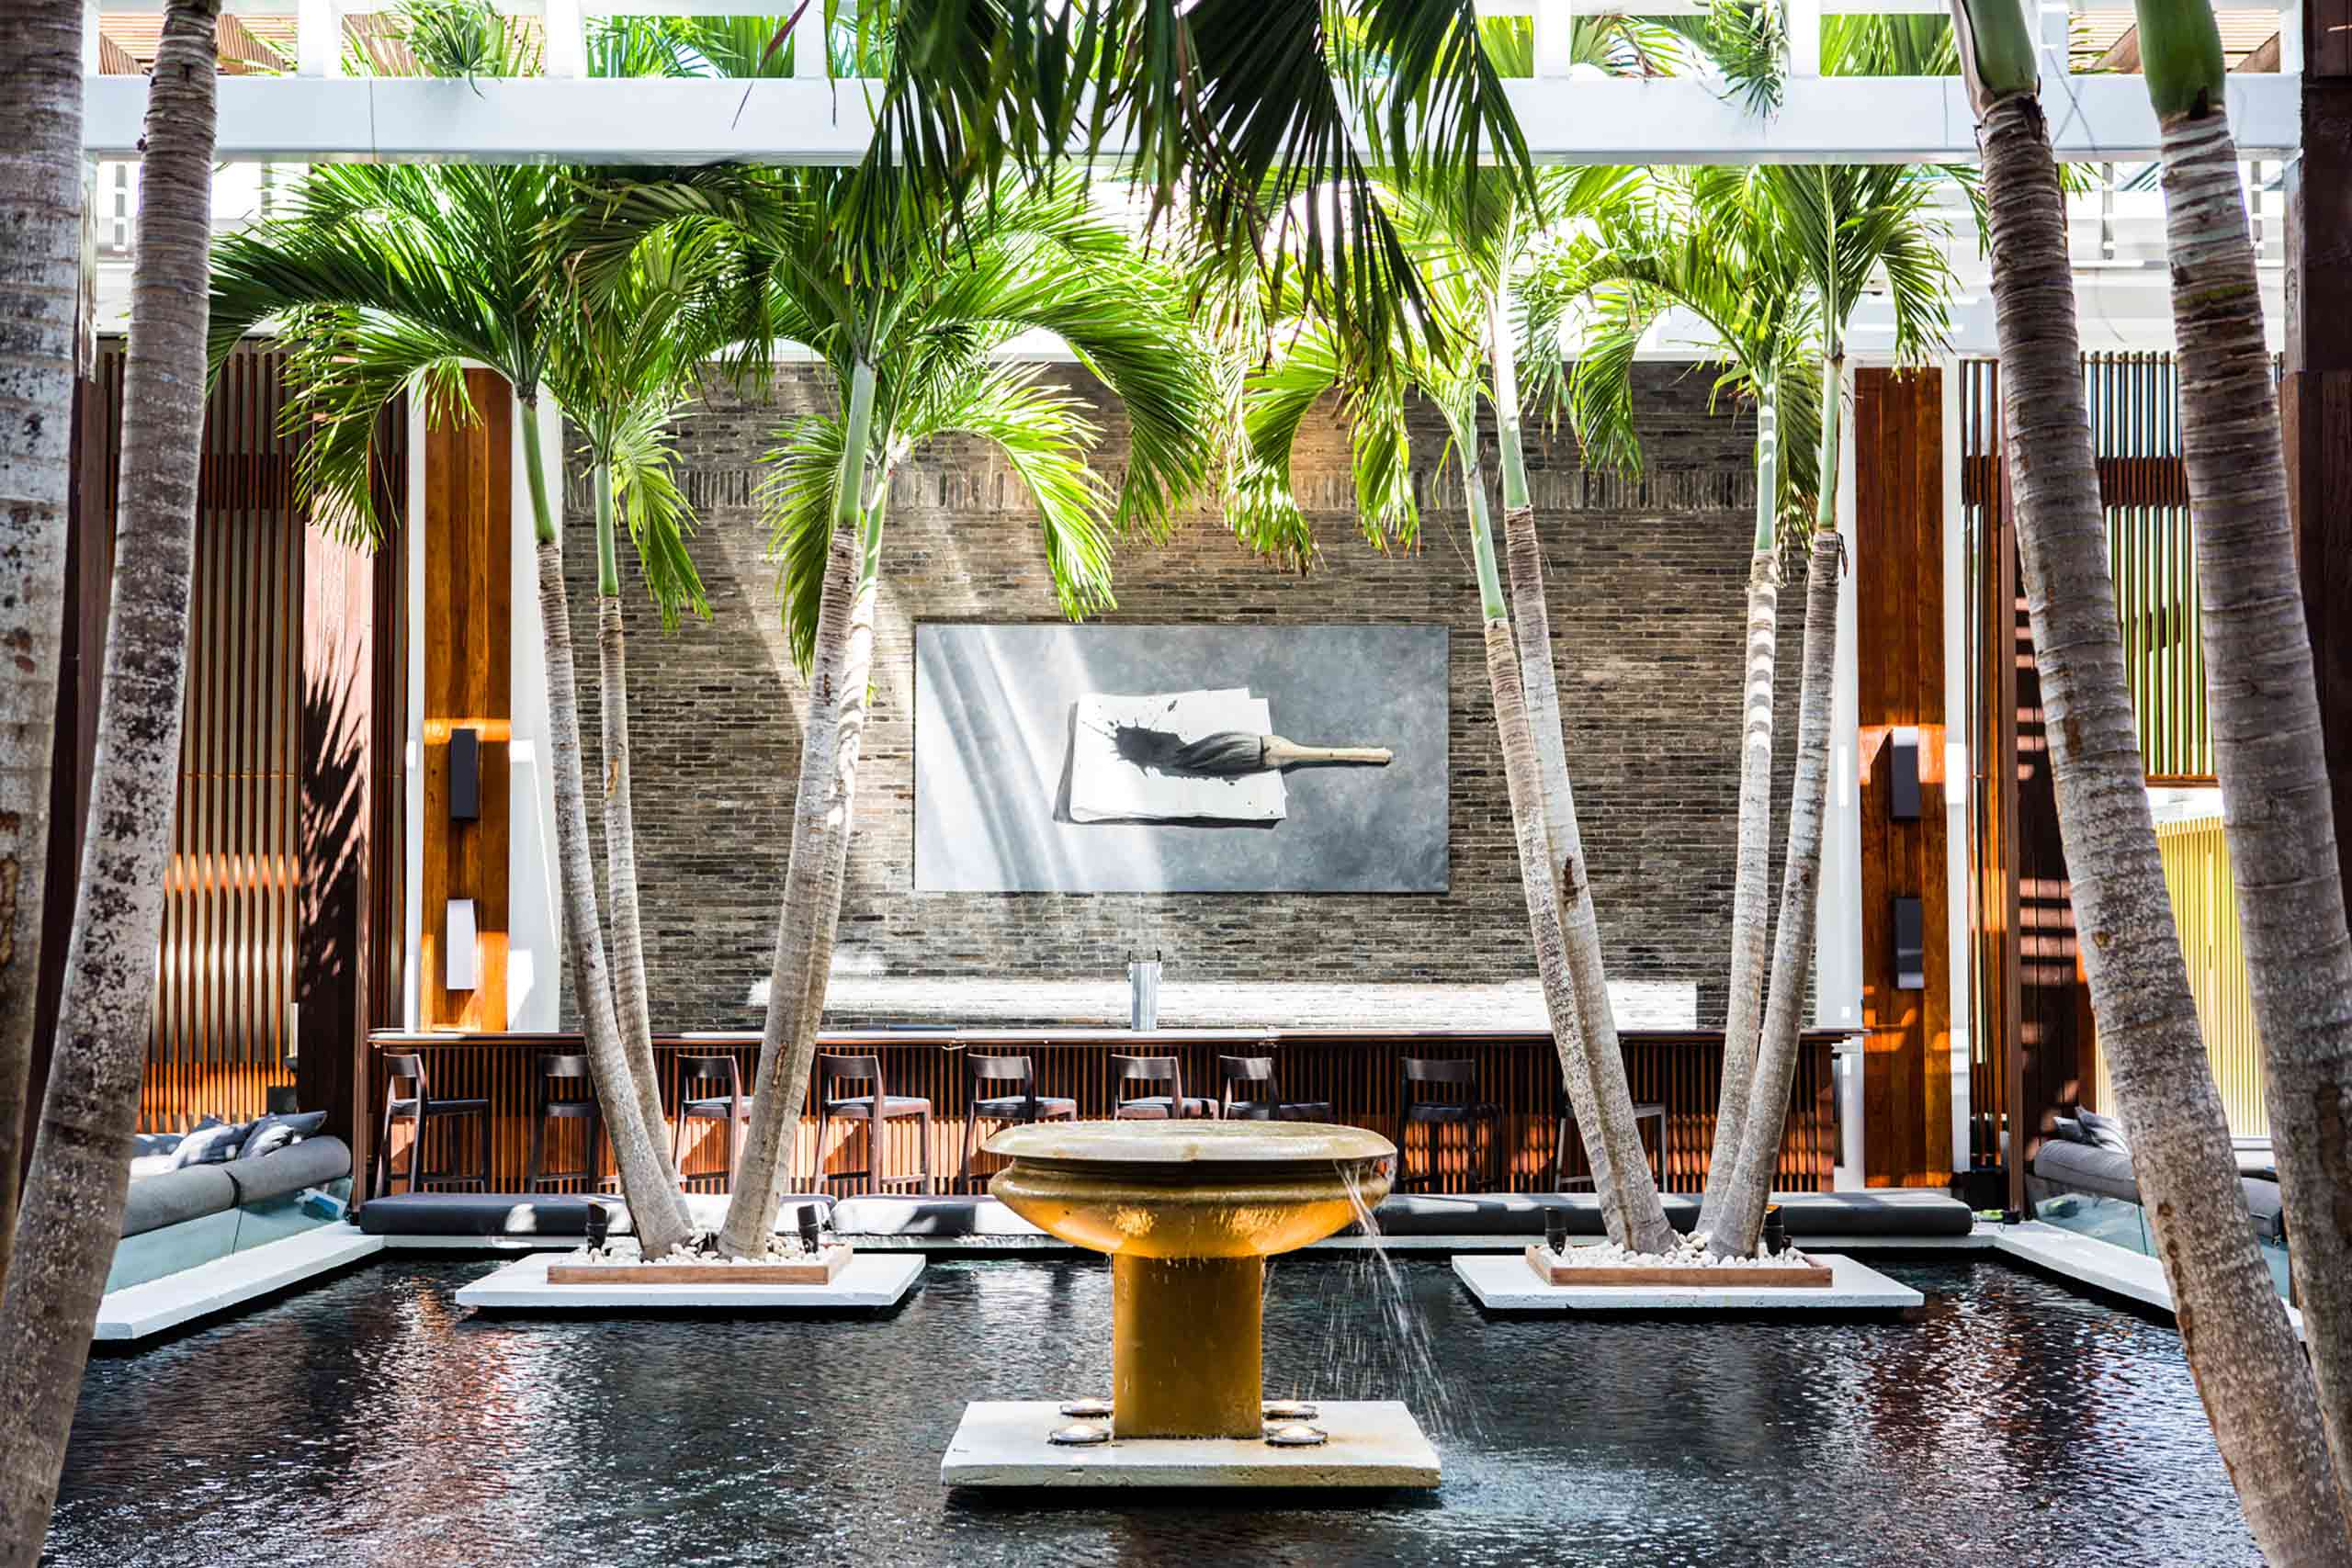 Jaya restaurant with it's reflective pool at the centre at The Setai, Miami Beach, Florida, USA